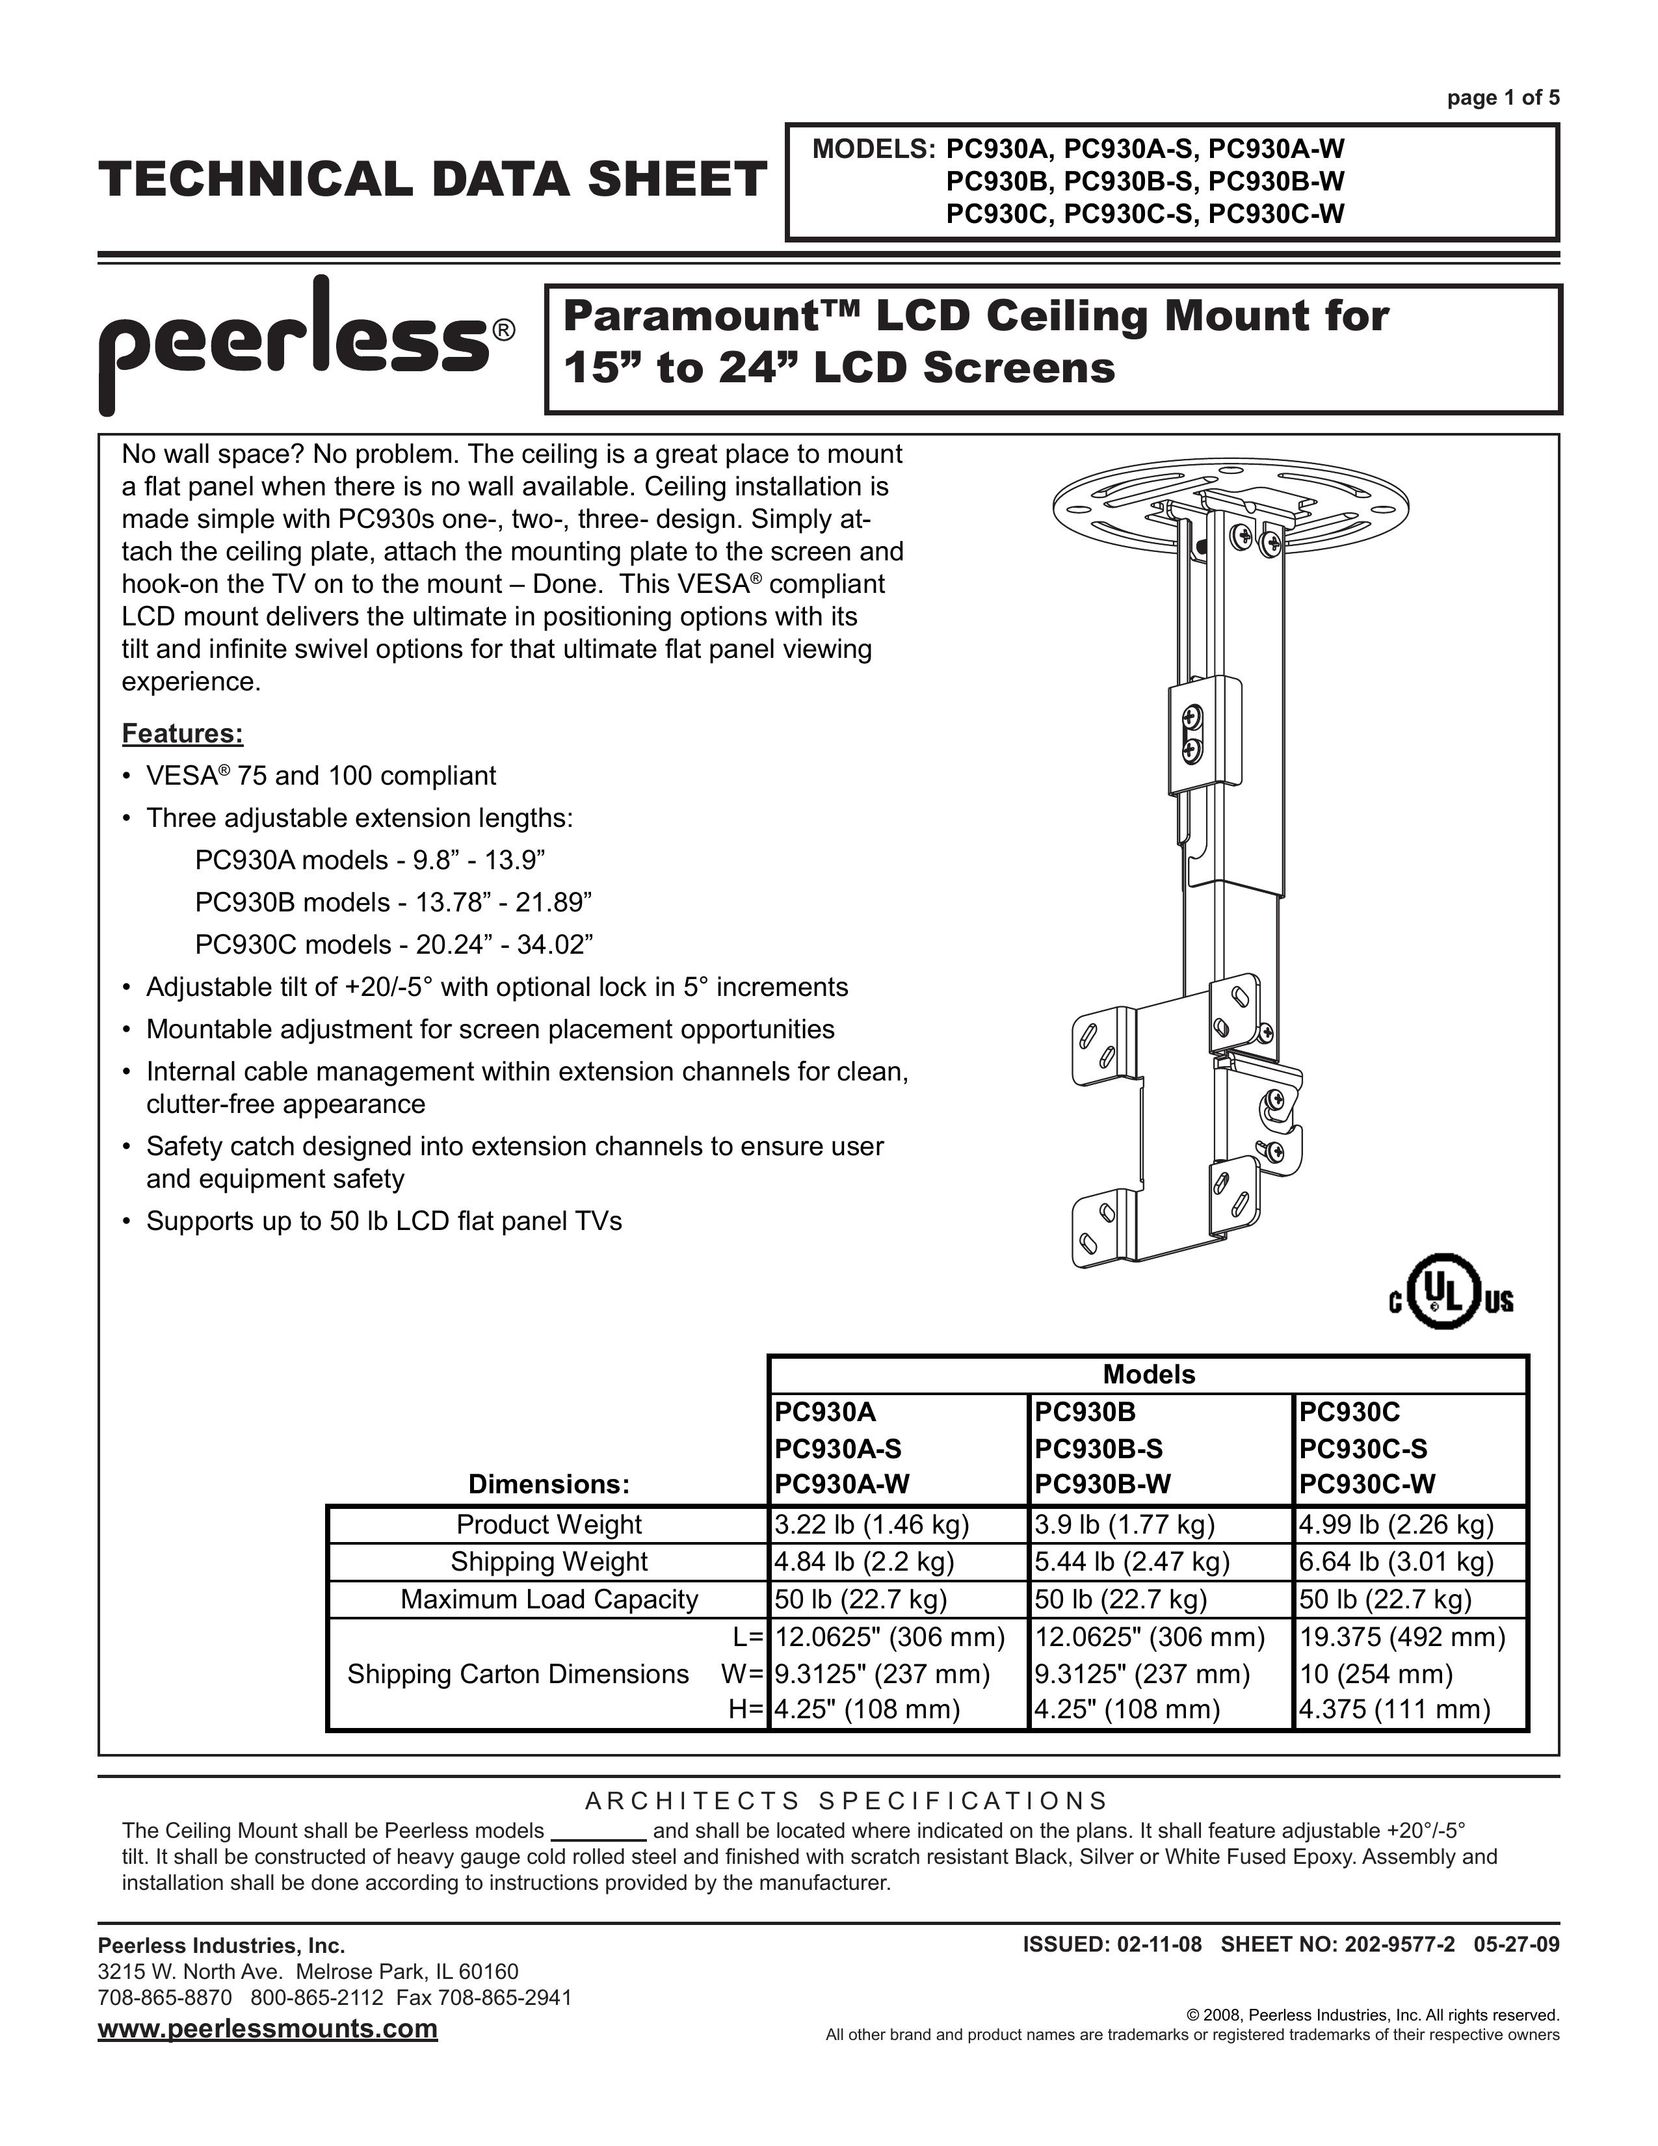 Peerless Industries PC930B-S TV Mount User Manual